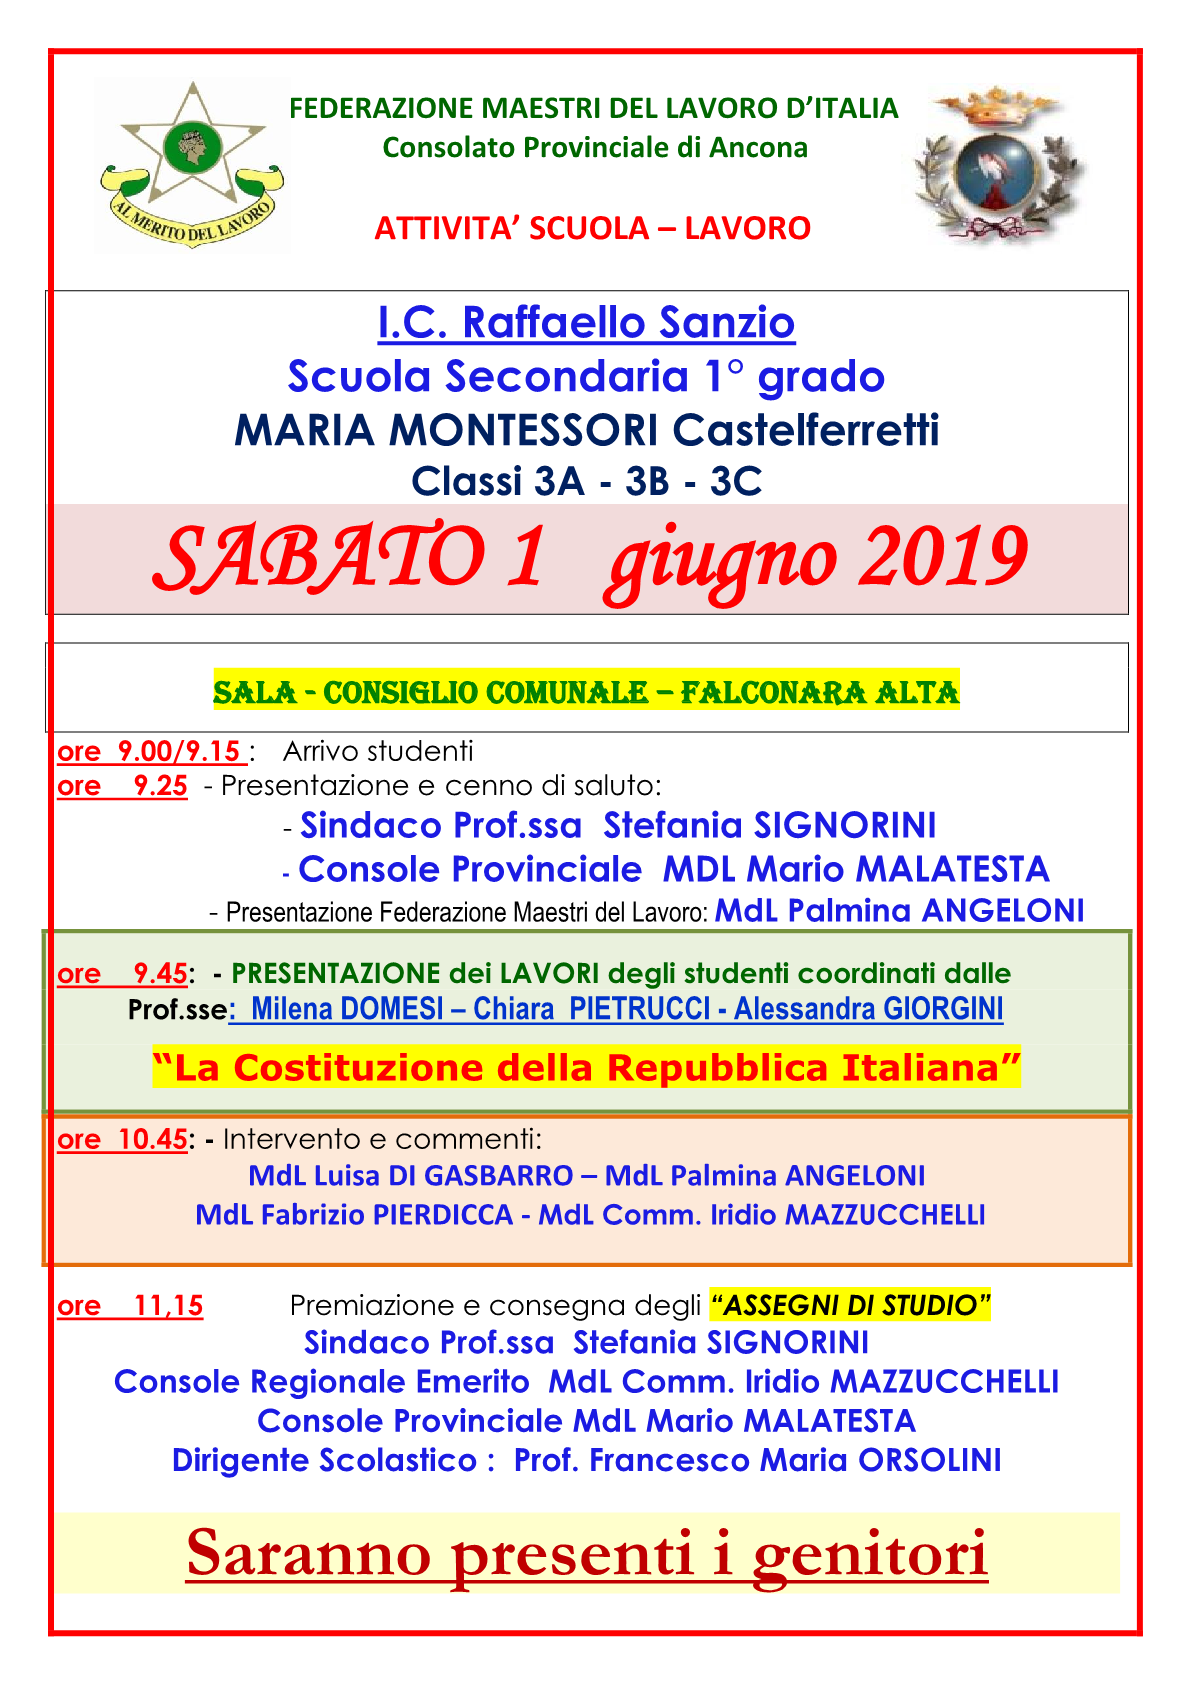 MDL SC-LAV 2  fase 3 A-B-C  Castelferretti  1 giu 2019 21